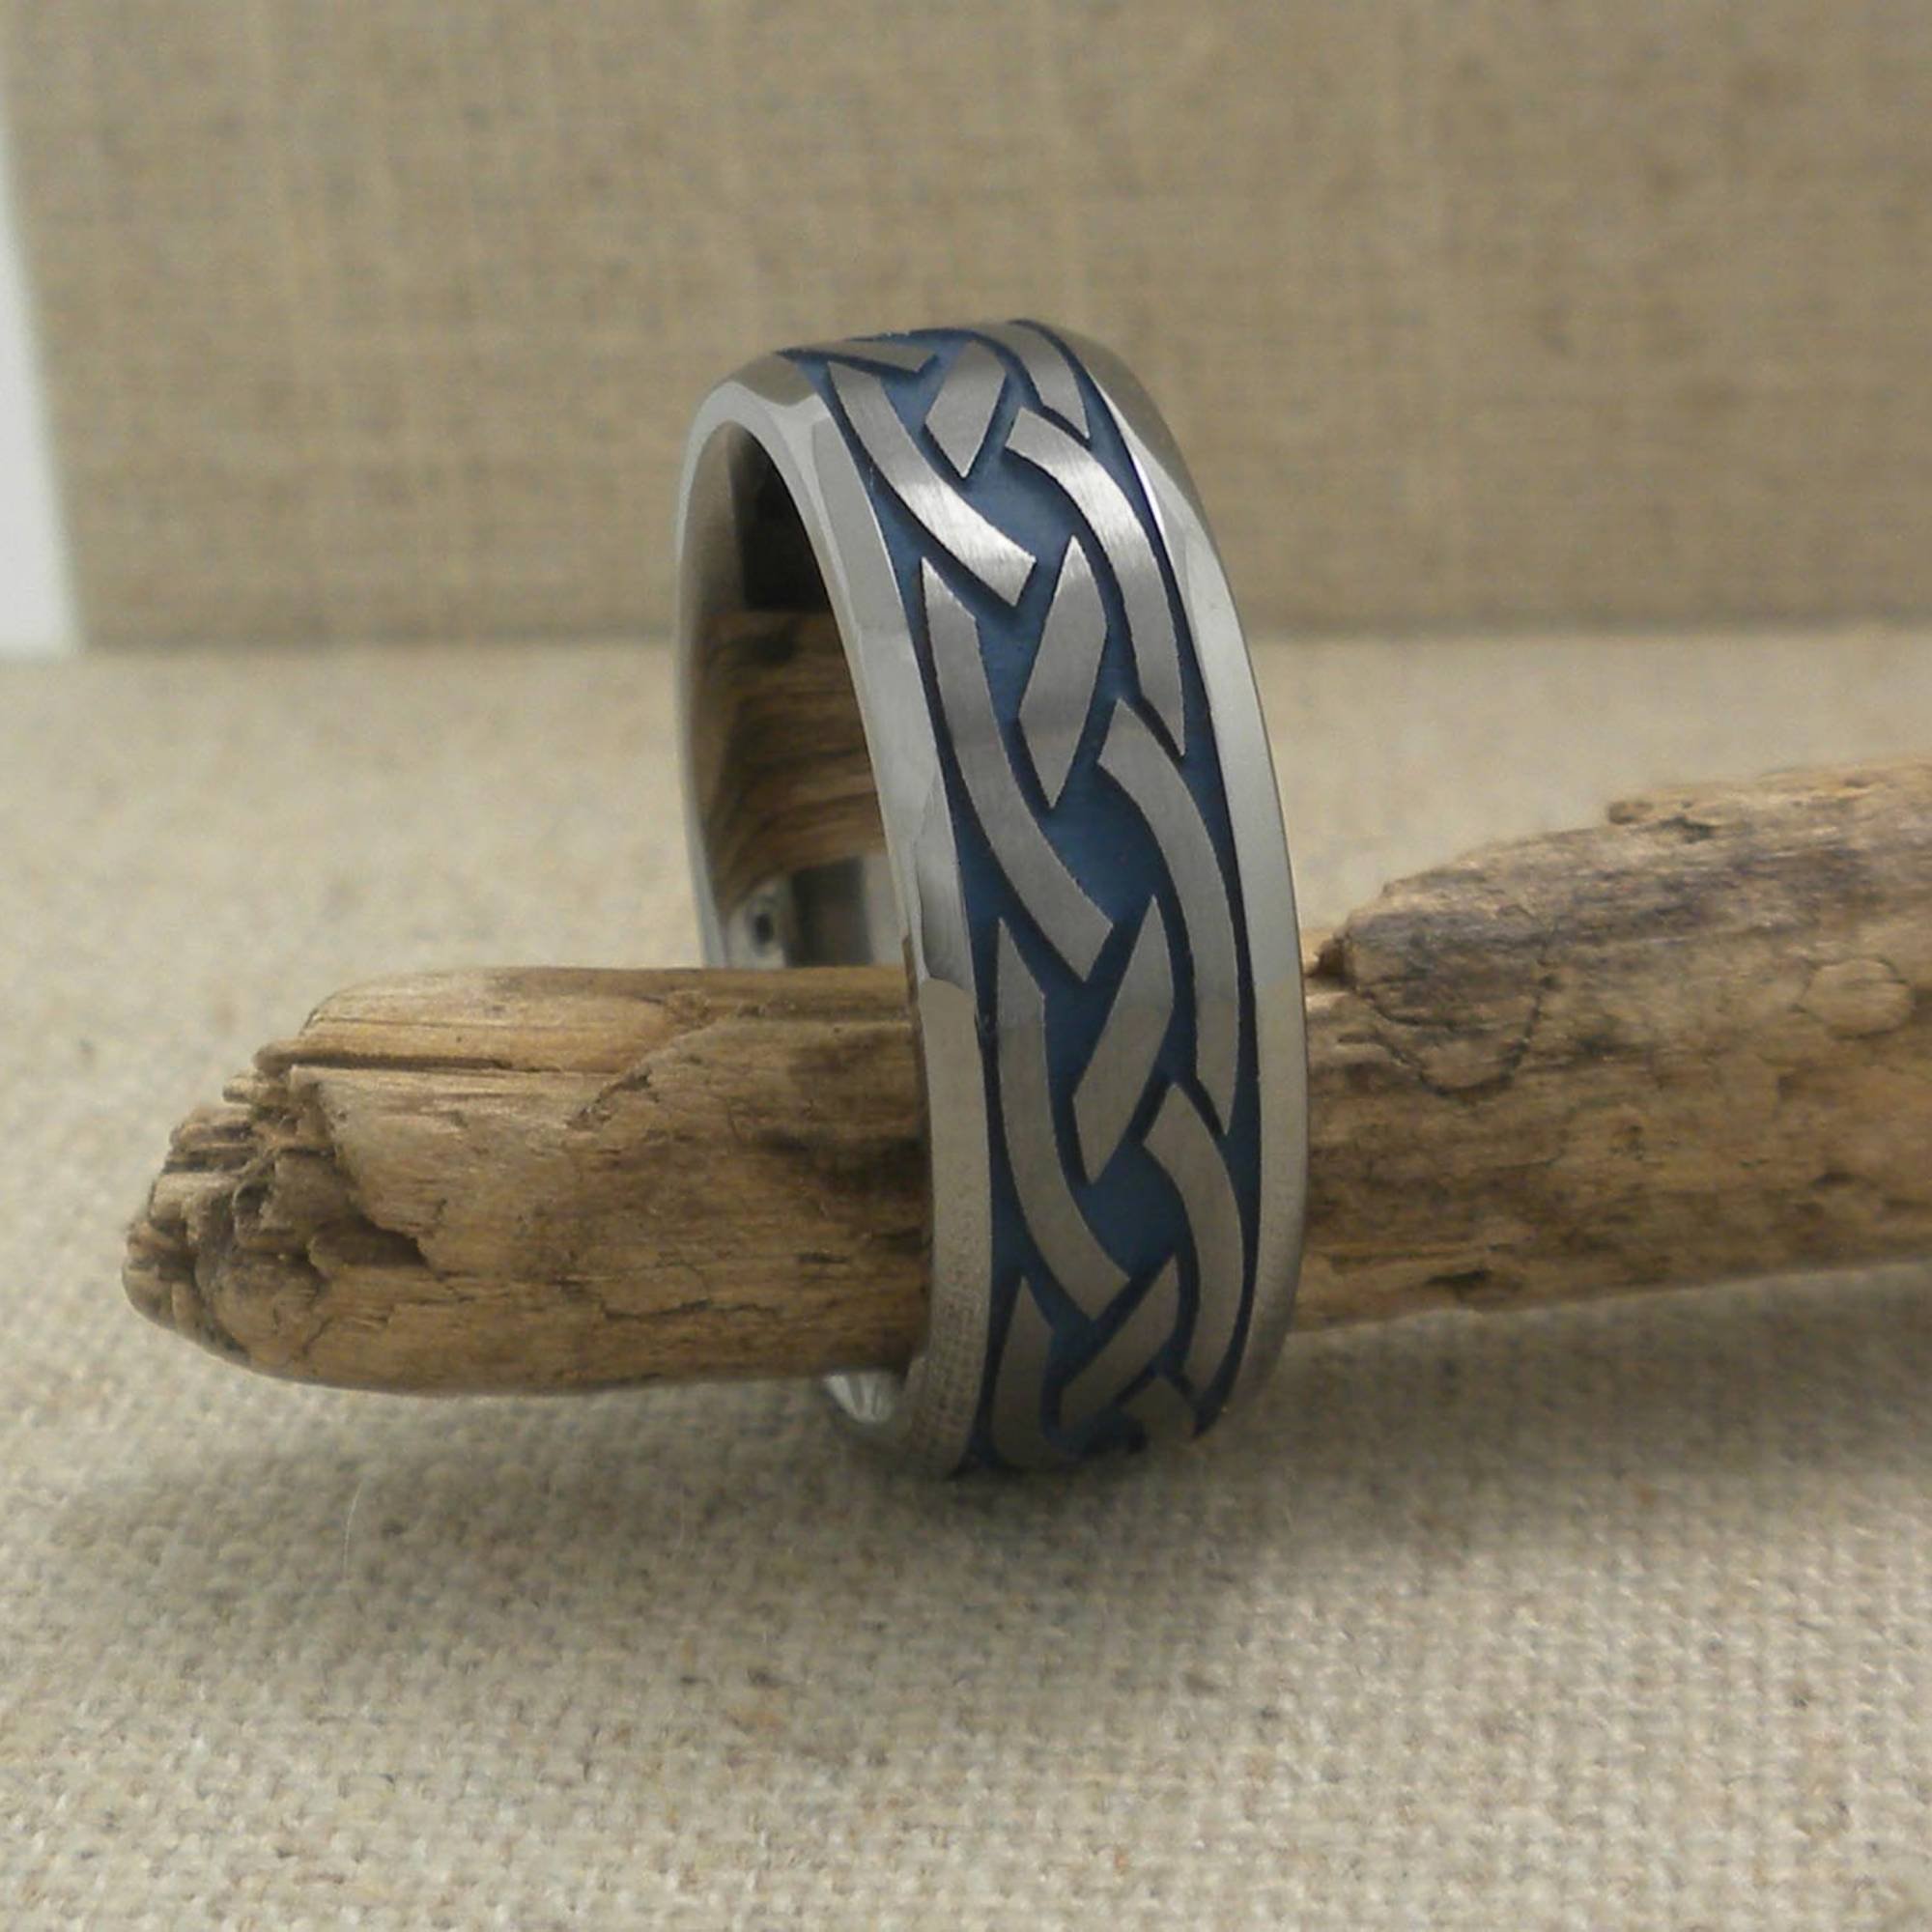 Tantalum Wedding Ring with Celtic Knot Design